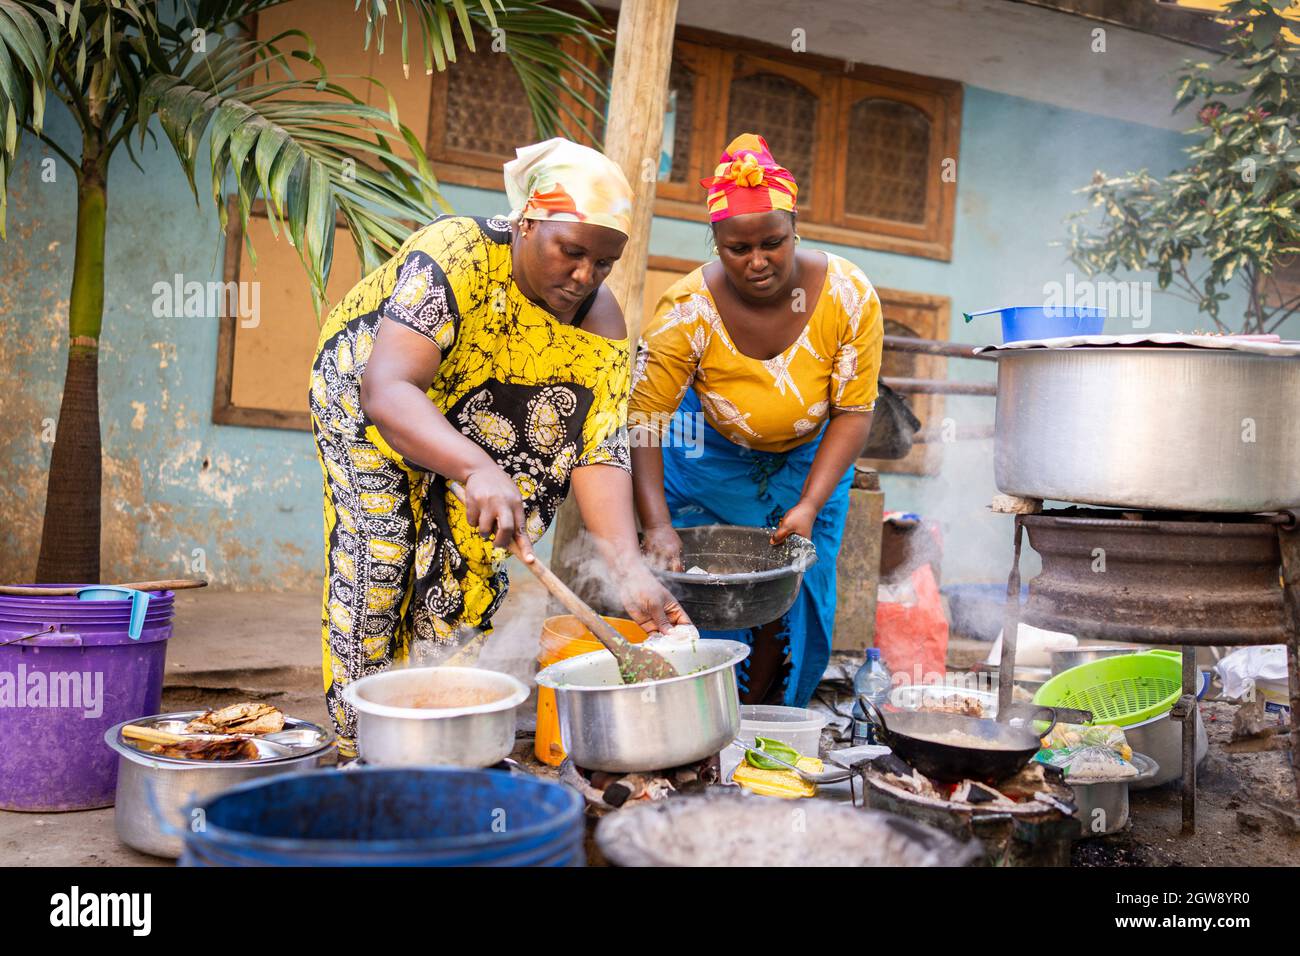 https://c8.alamy.com/comp/2GW8YR0/african-woman-cooking-traditional-food-at-street-2GW8YR0.jpg